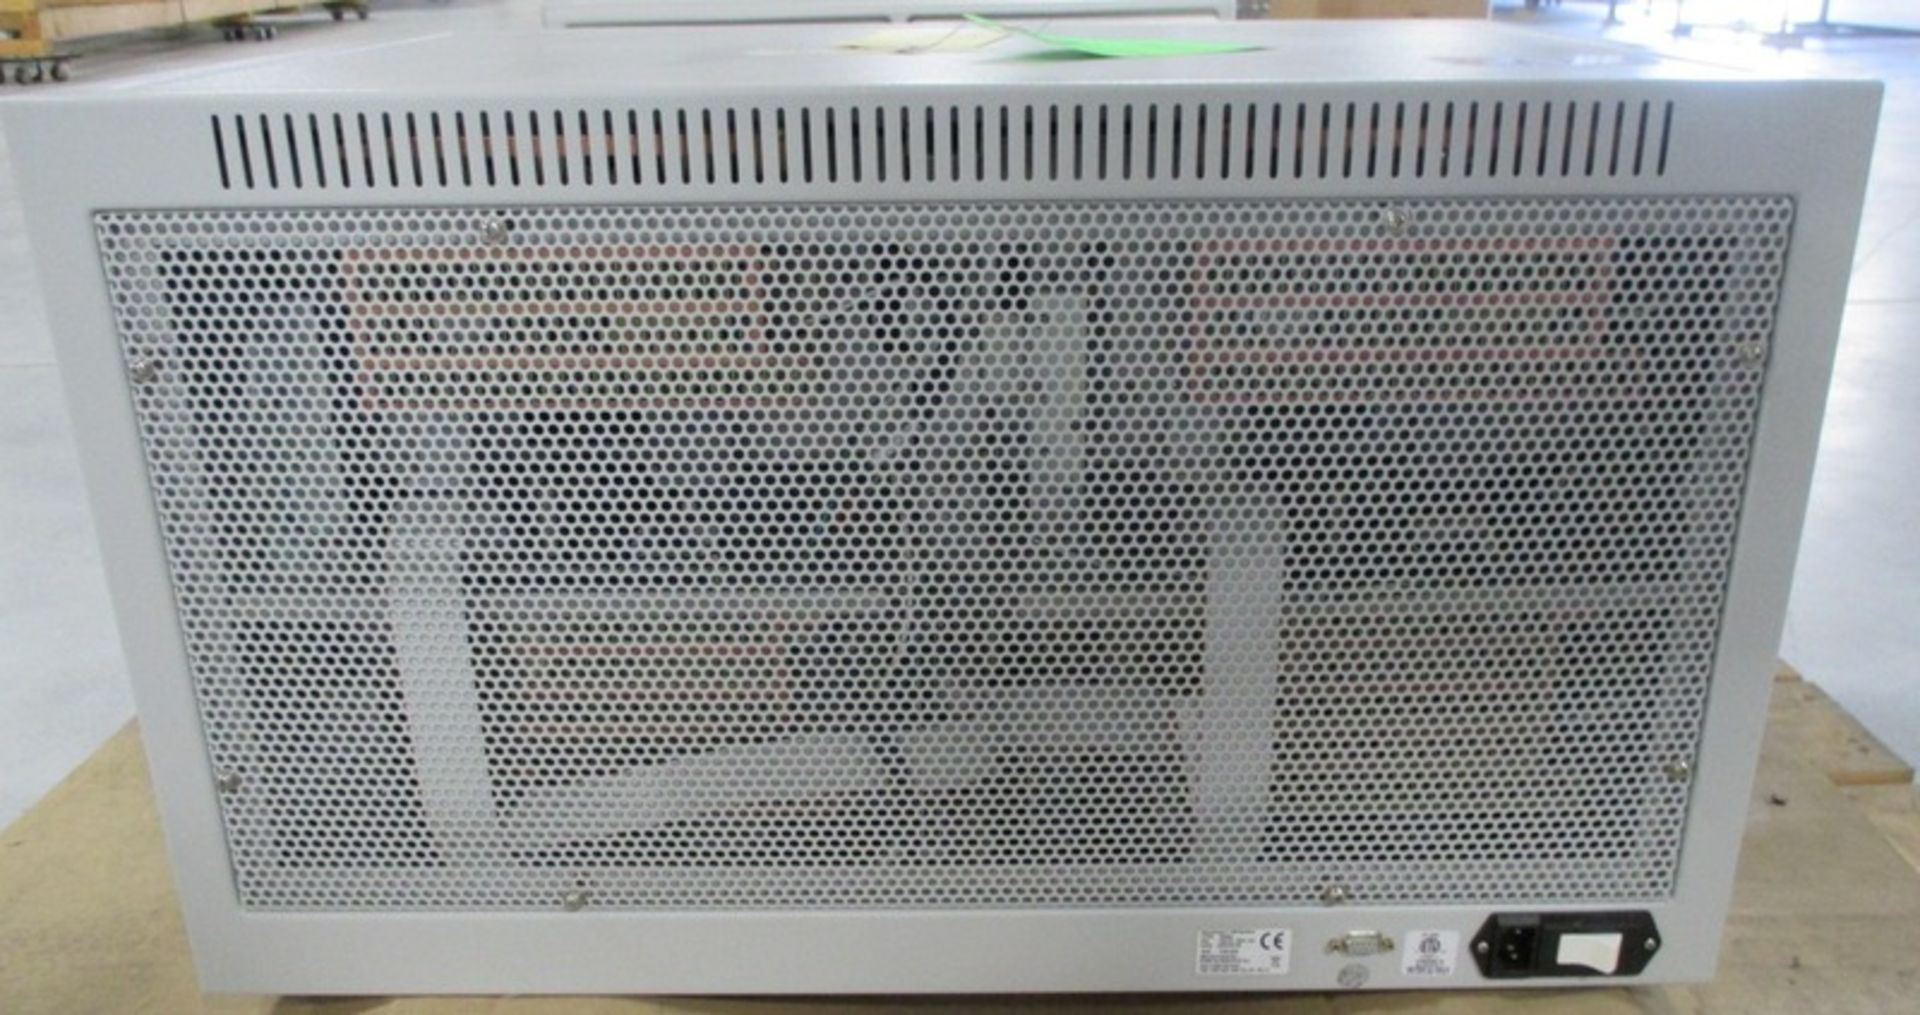 Foss MicroFoss 128 Incubator - Image 3 of 3